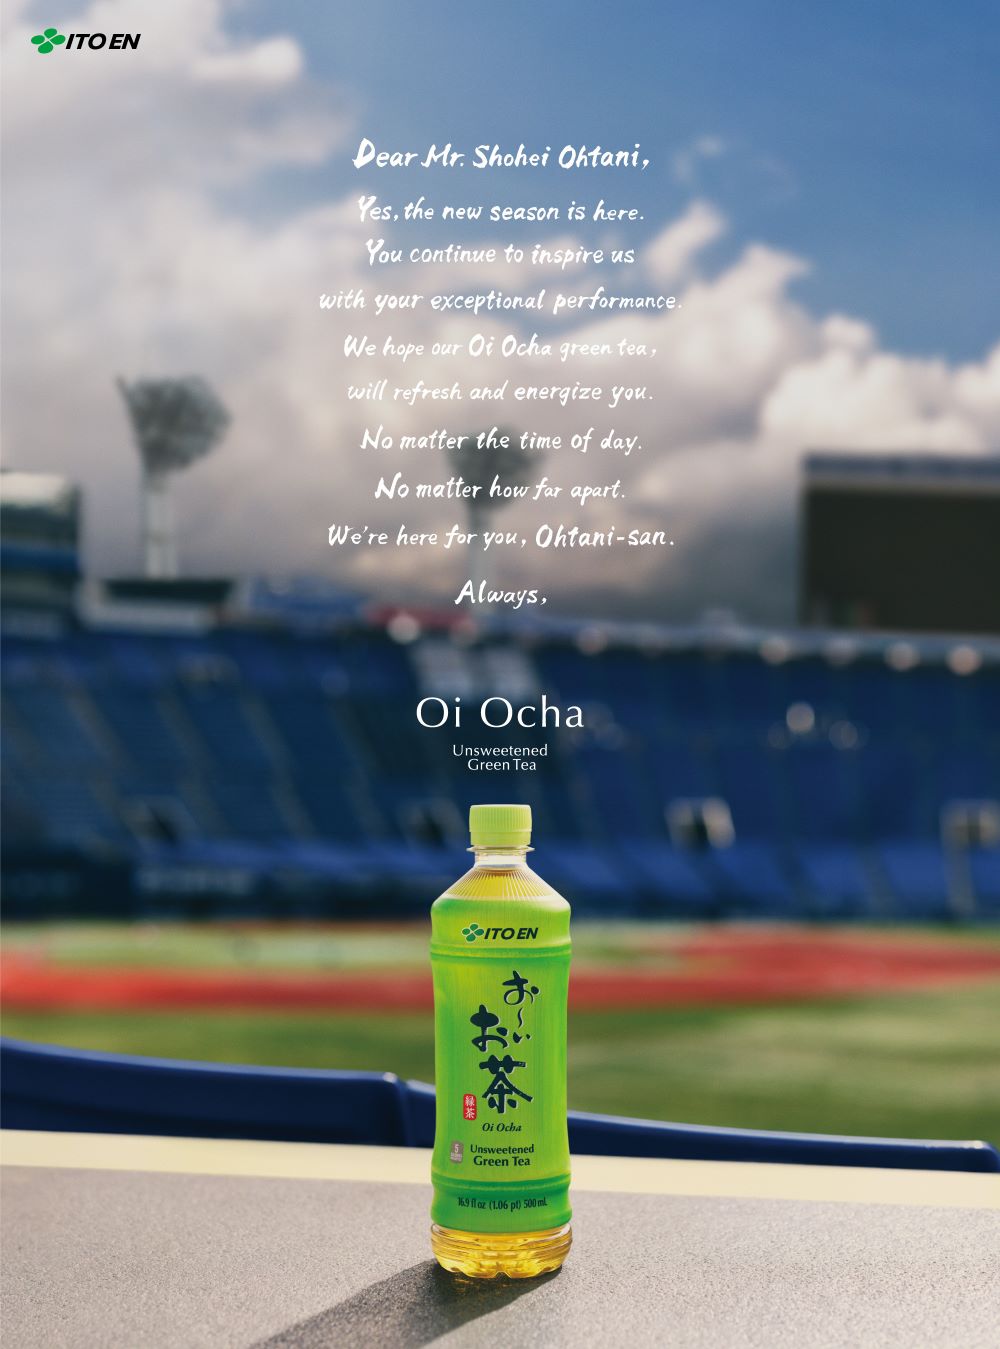 English News - Shohei Ohtani Signs Global Partnership with ITO EN's Green Tea Brand "Oi Ocha"